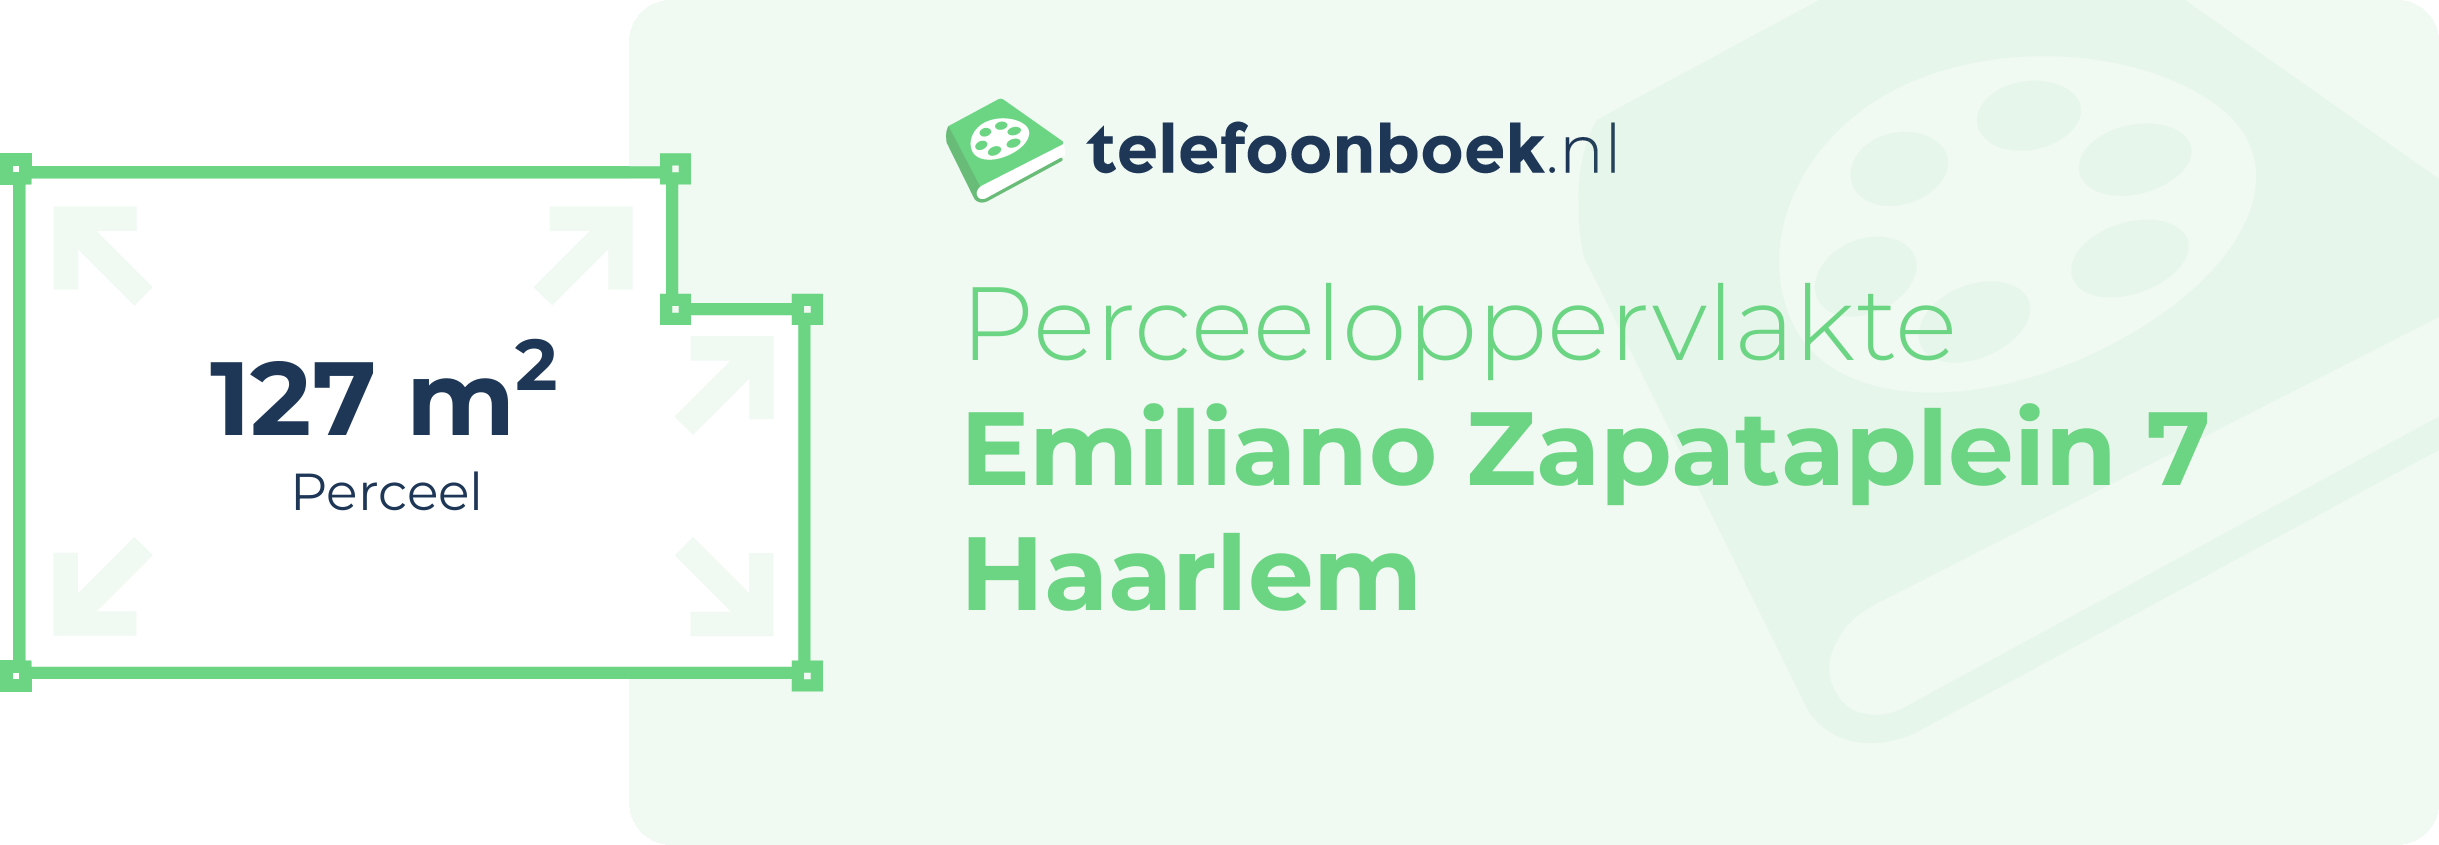 Perceeloppervlakte Emiliano Zapataplein 7 Haarlem